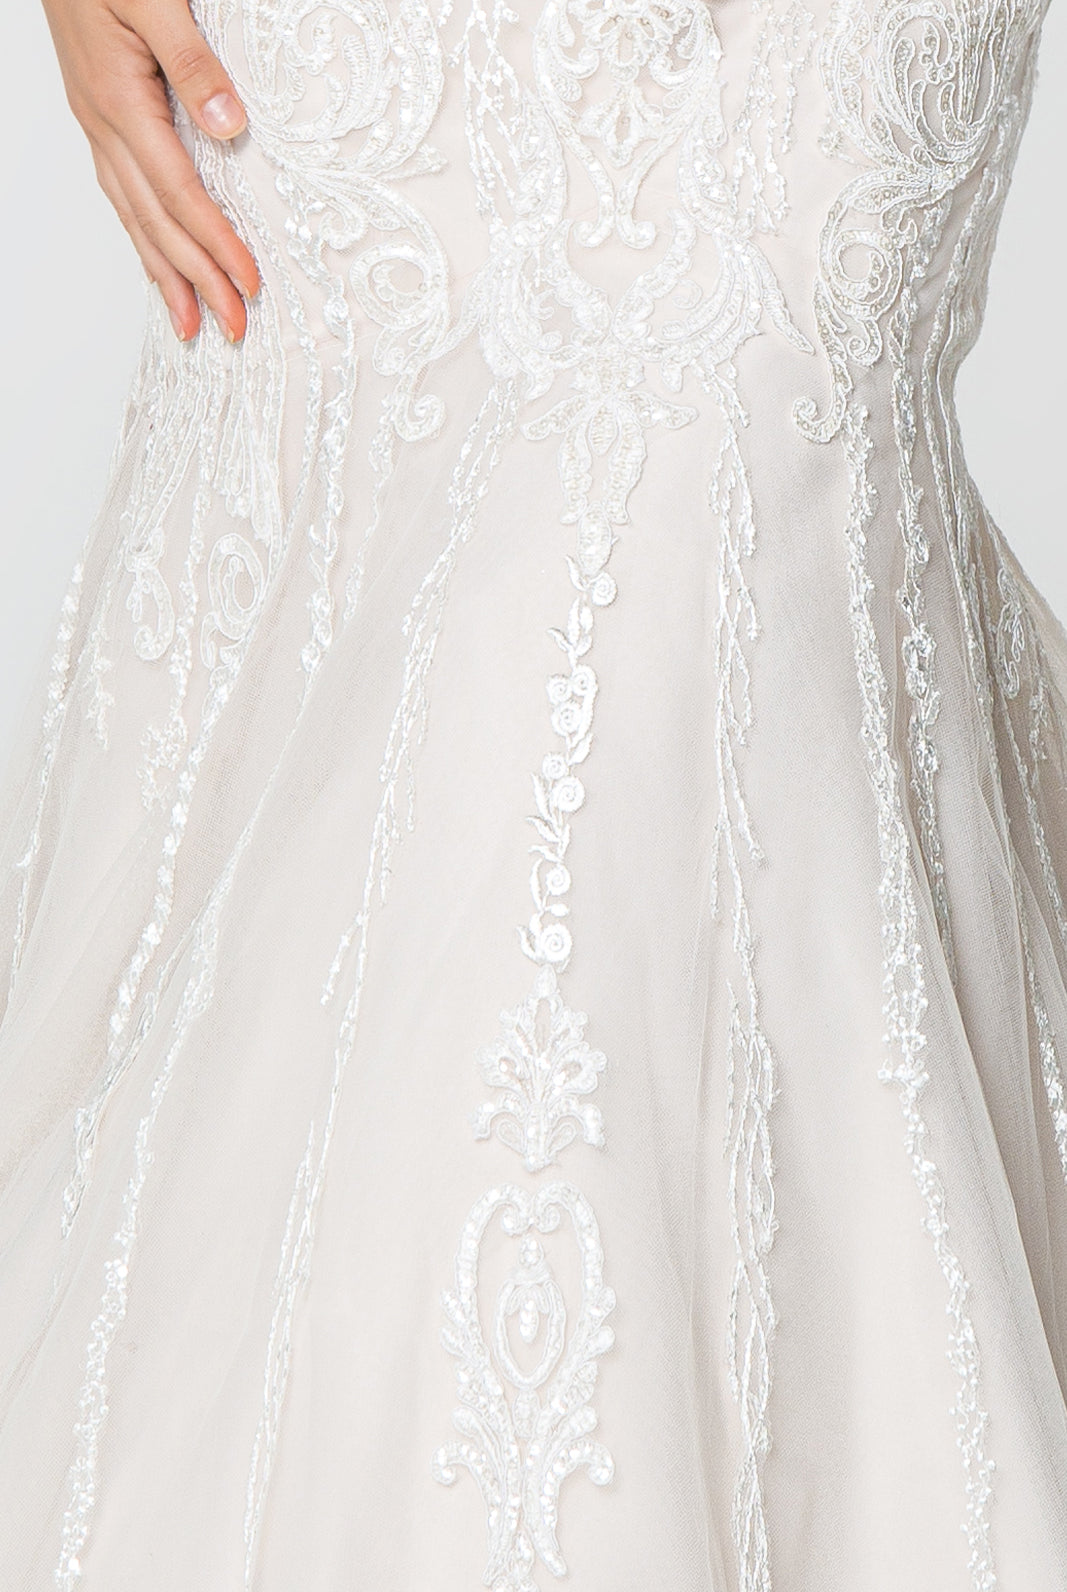 Lace Embellished Deep V-Neck Wedding Gown U-Back GLGL2821-WEDDING GOWNS-smcfashion.com